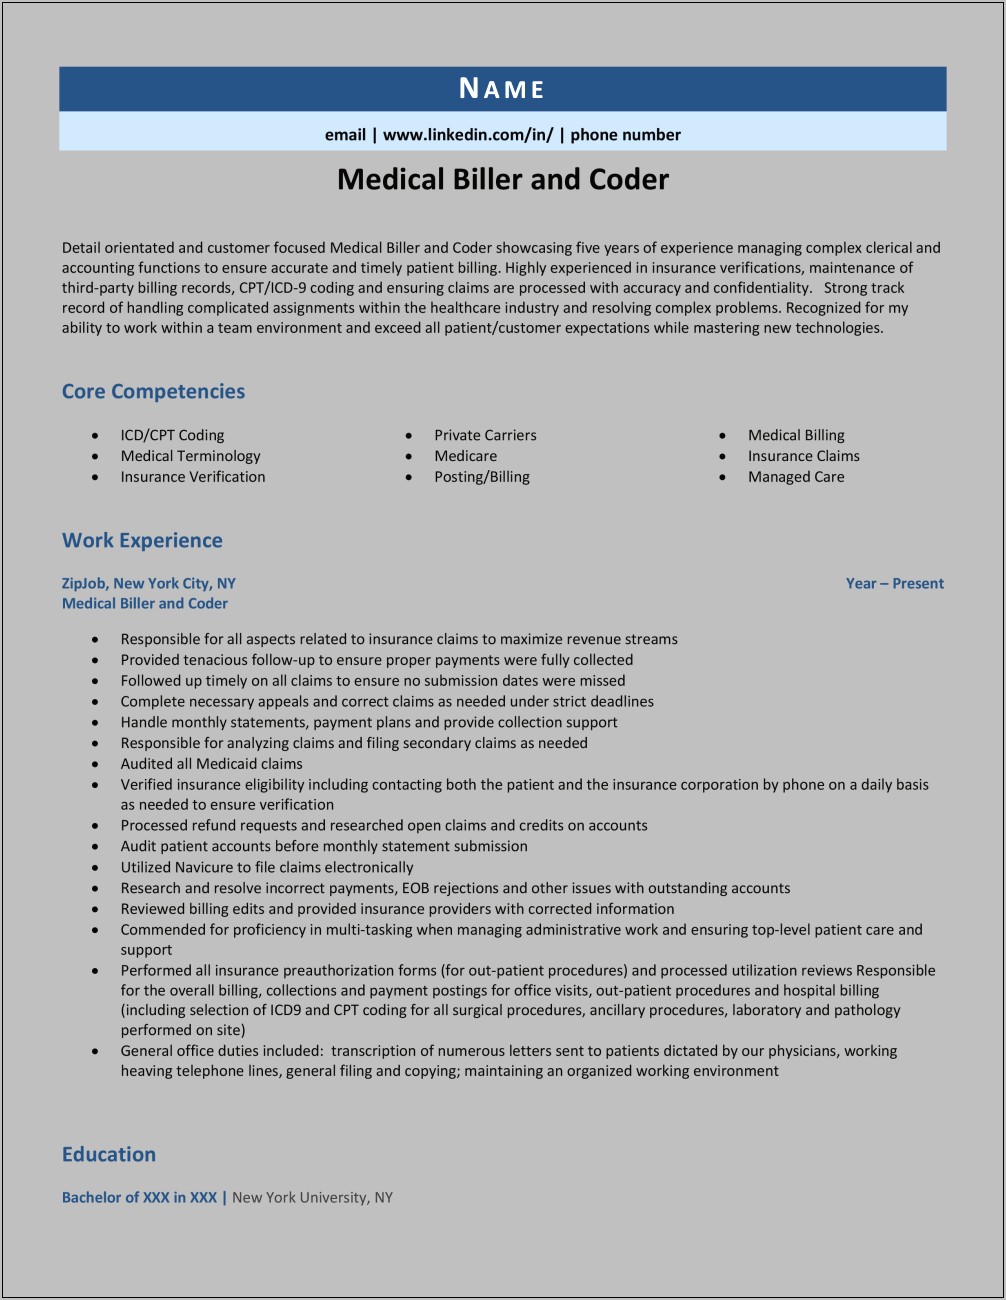 Hard Skills For Medical Billing And Coding Resume